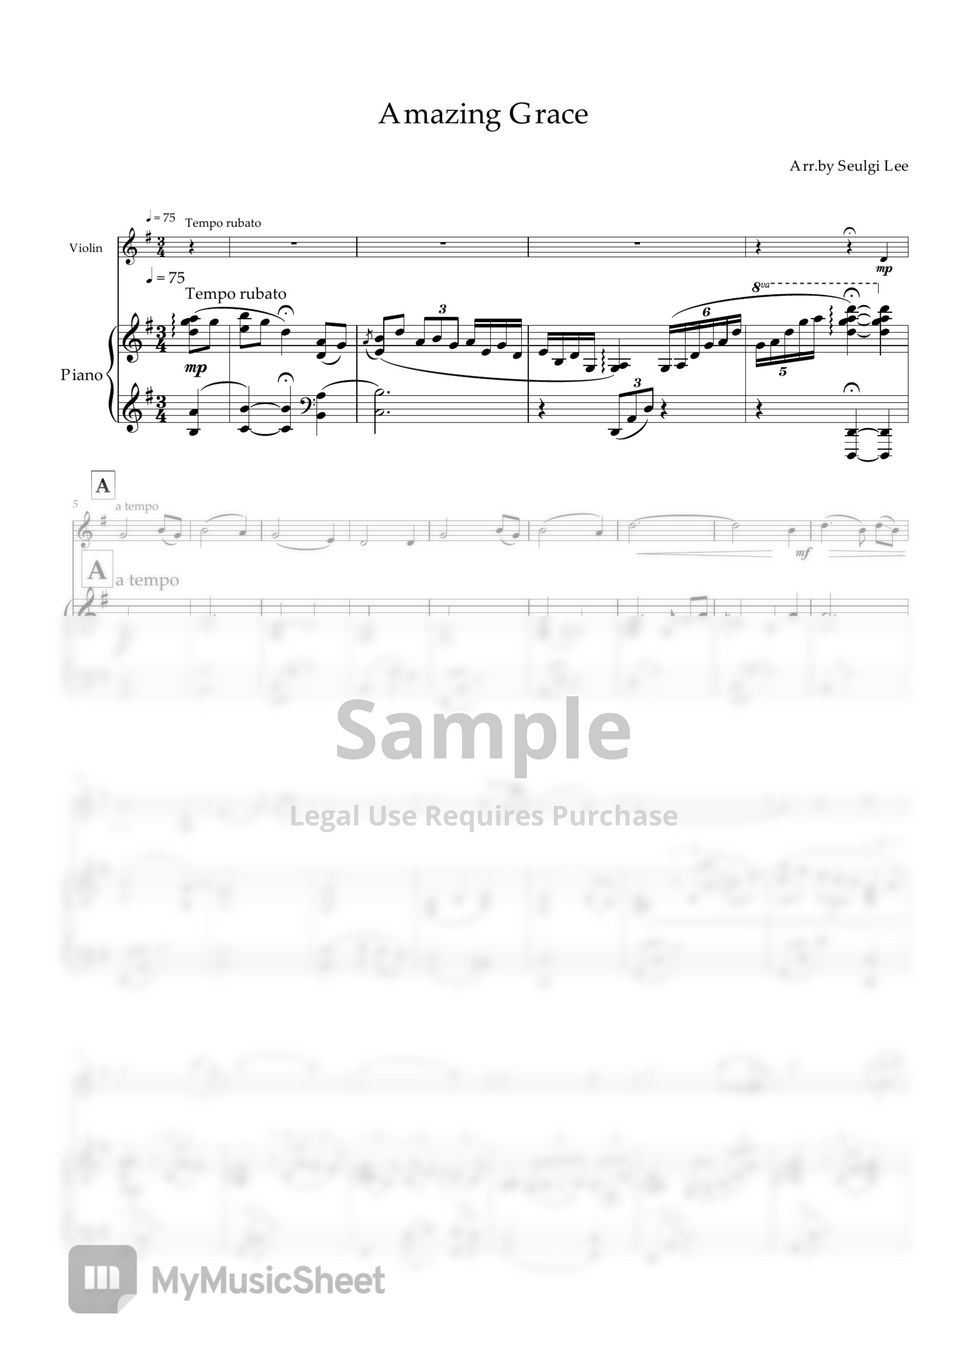 John Newton - Amazing Grace (Violin and Piano ver.) 어메이징그레이스_바이올린_피아노 by Seulgi Lee